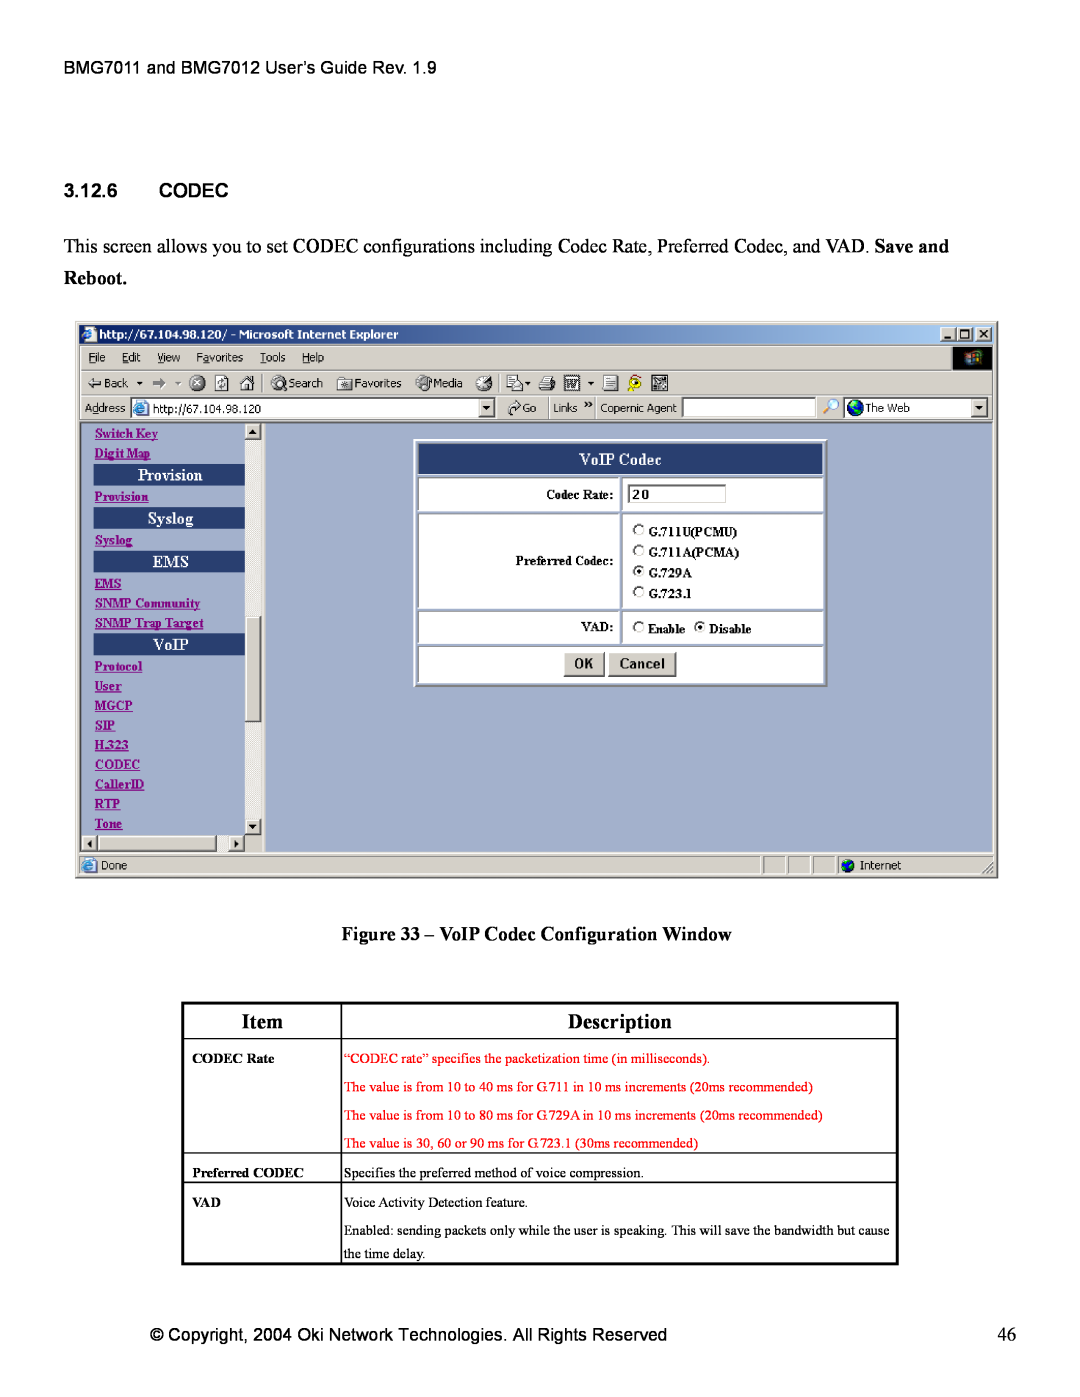 Oki BMG7012, BMG7011 manual 3.12.6CODEC, Reboot, VoIP Codec Configuration Window, Description, CODEC Rate, Preferred CODEC 